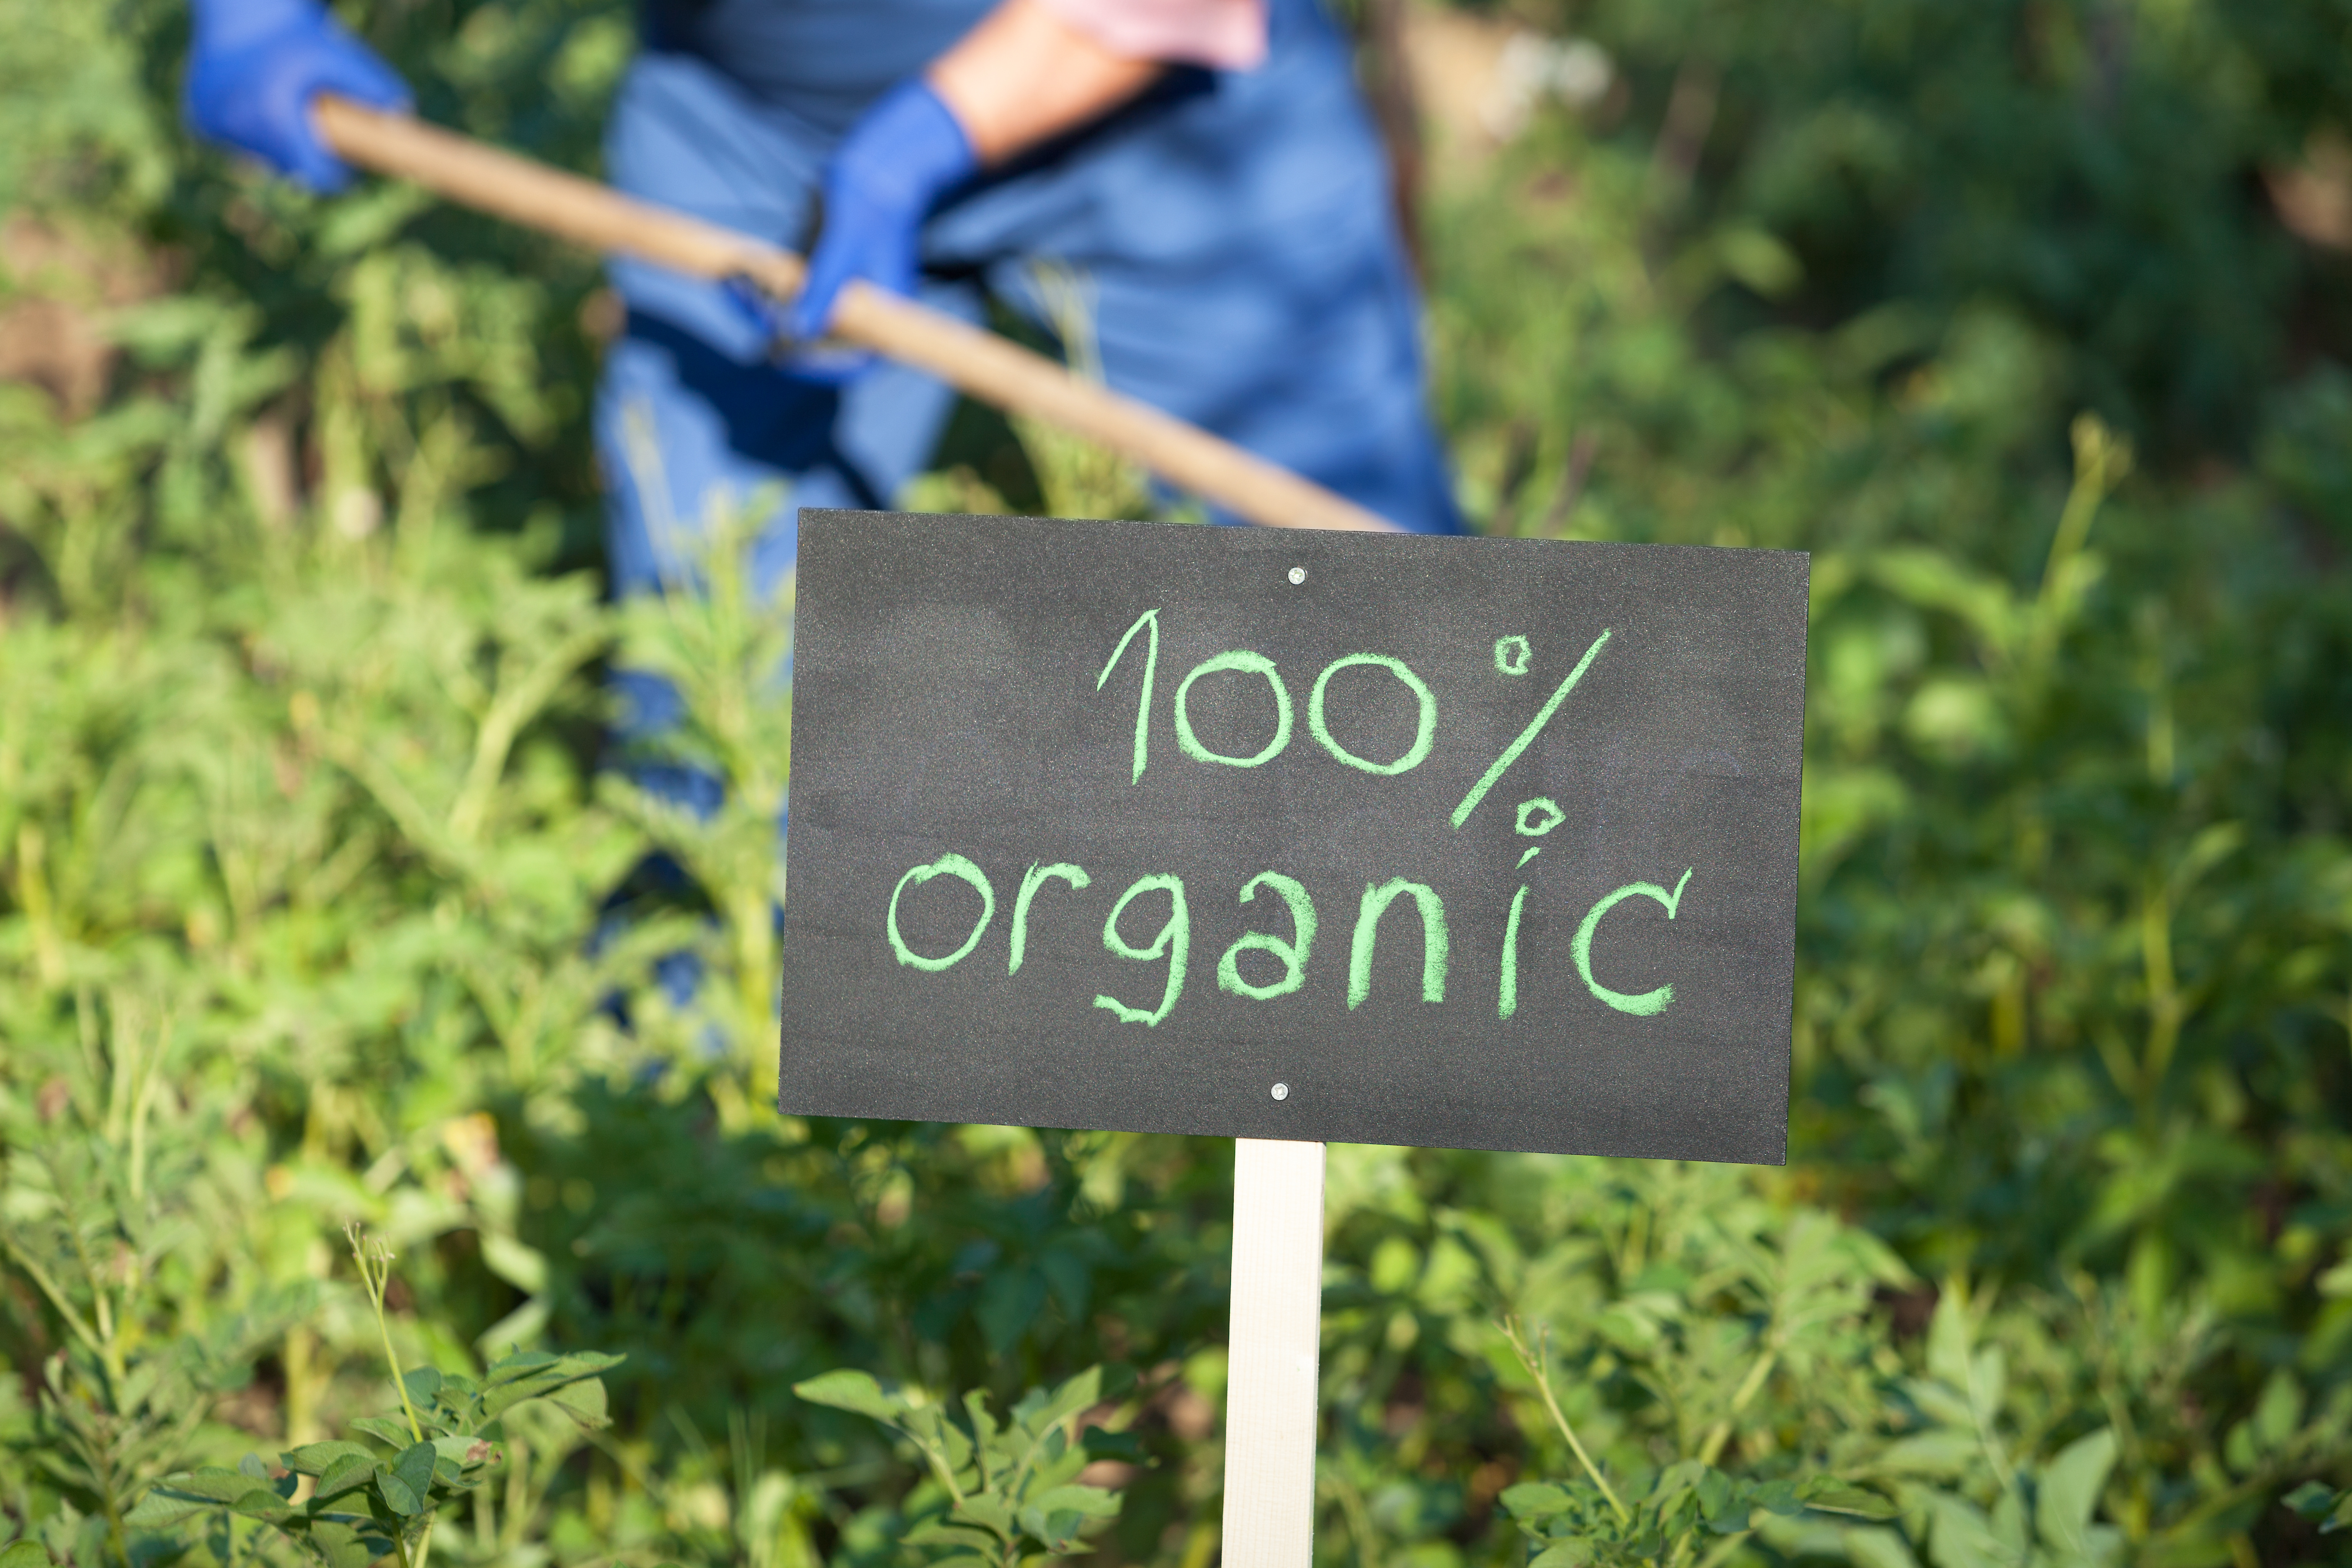 organic certification - organic labels - organic farming - organic products - organic food - organic agriculture